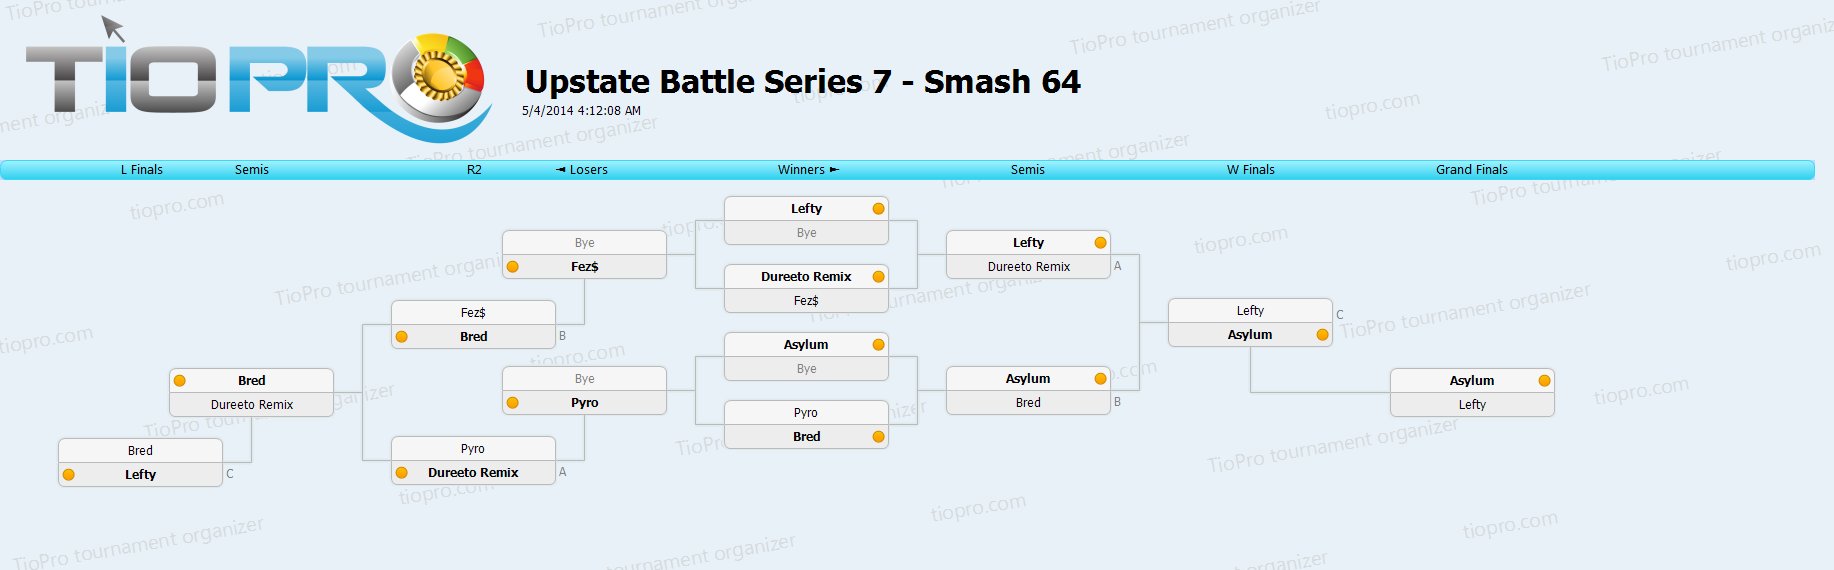 Upstate Battle Series - Smash 64